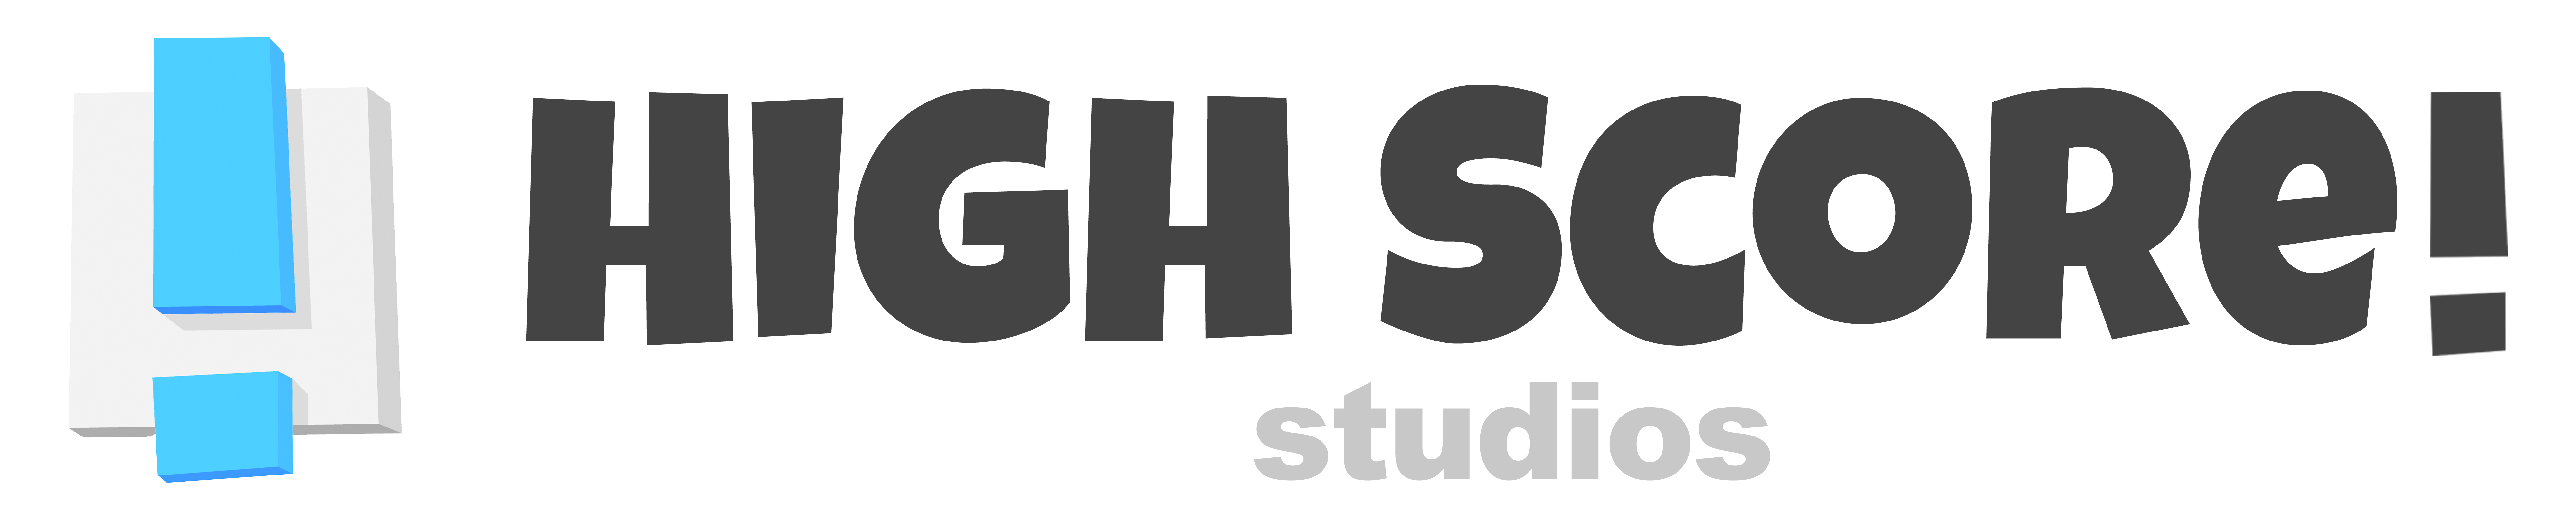 High Score Studios